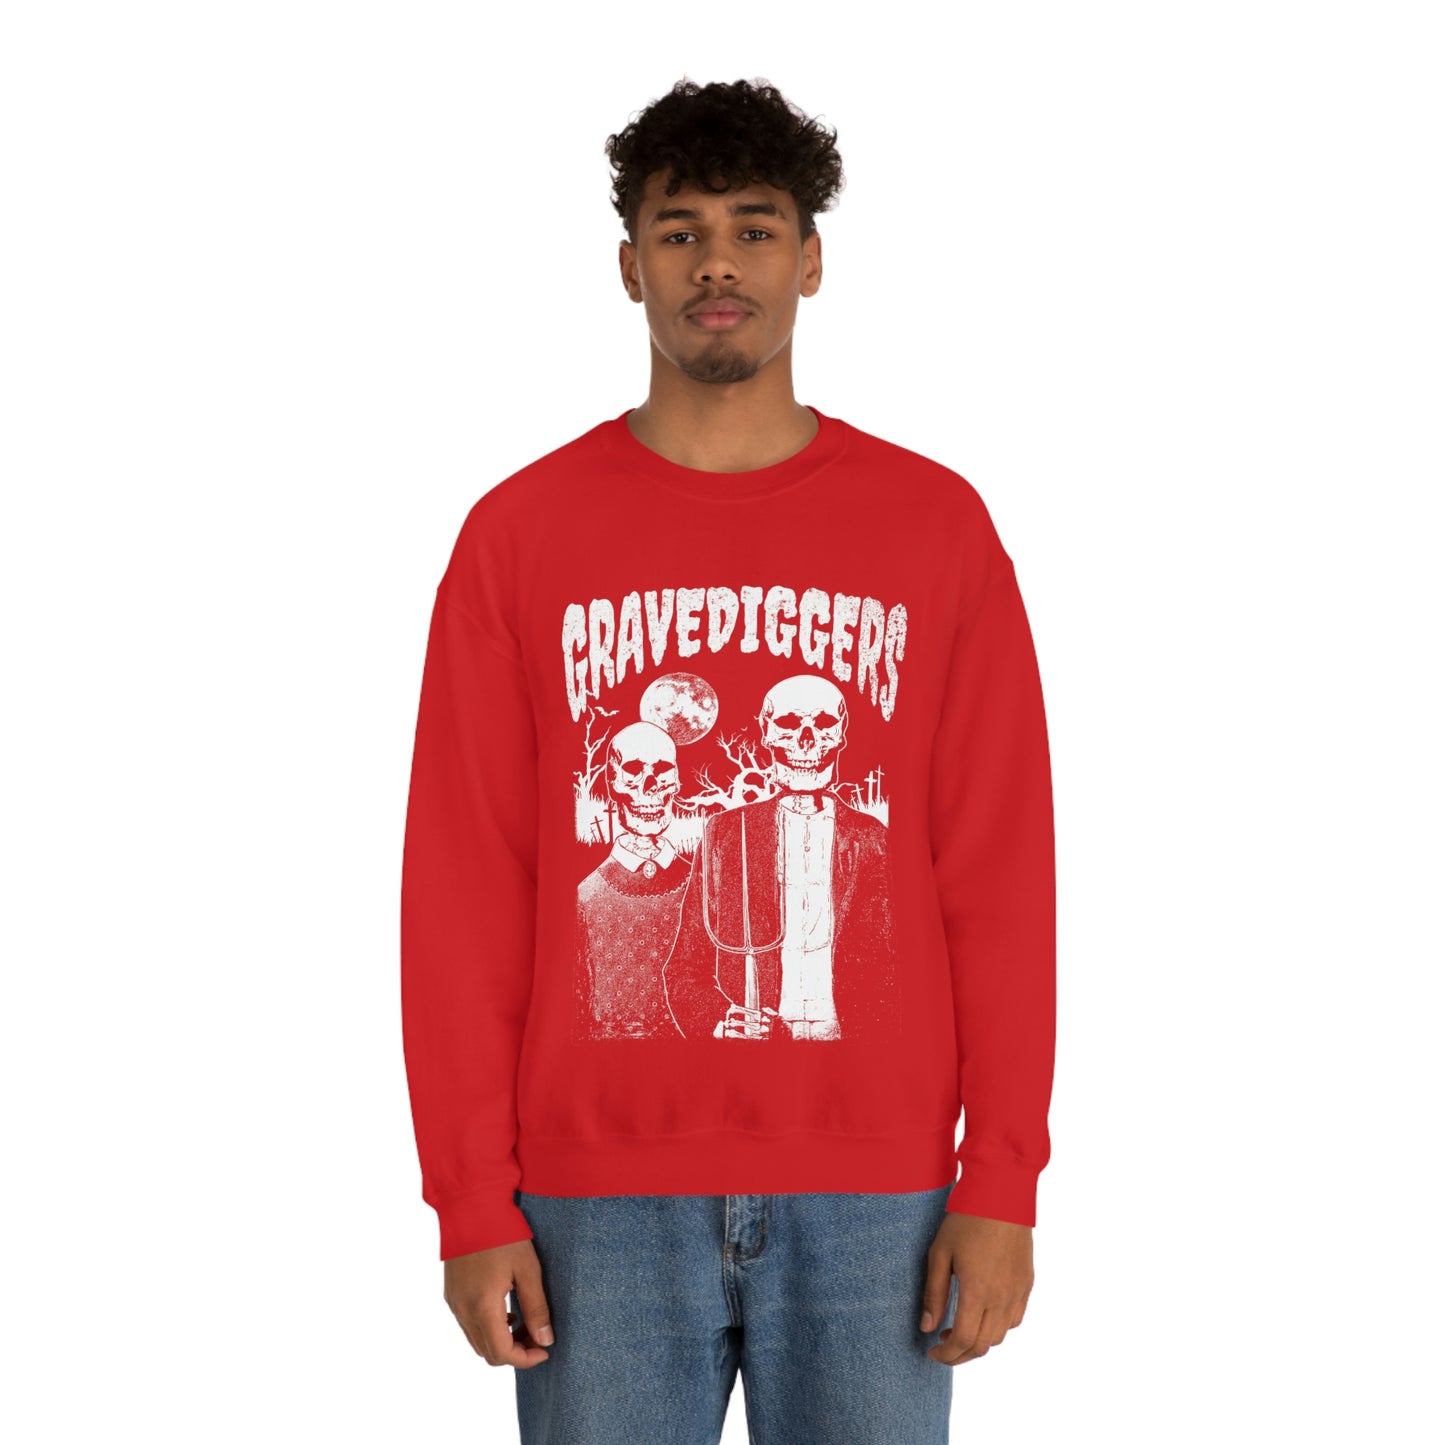 Gravediggers Goth Aesthetic Sweatshirt